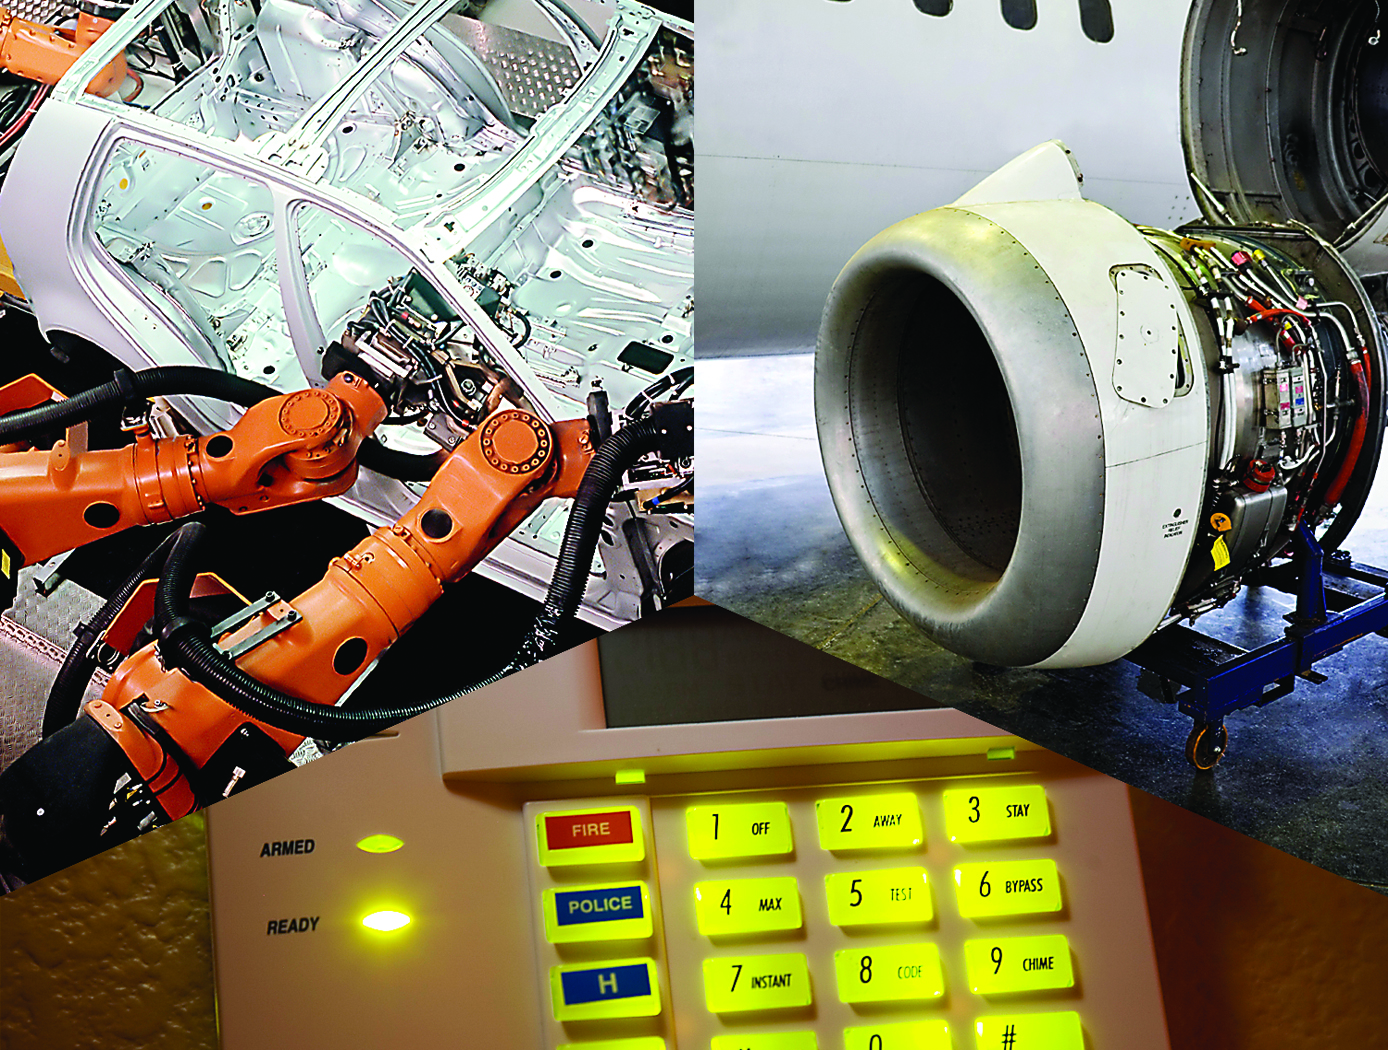 Security system keypad, engine inspection, robotic assembly line